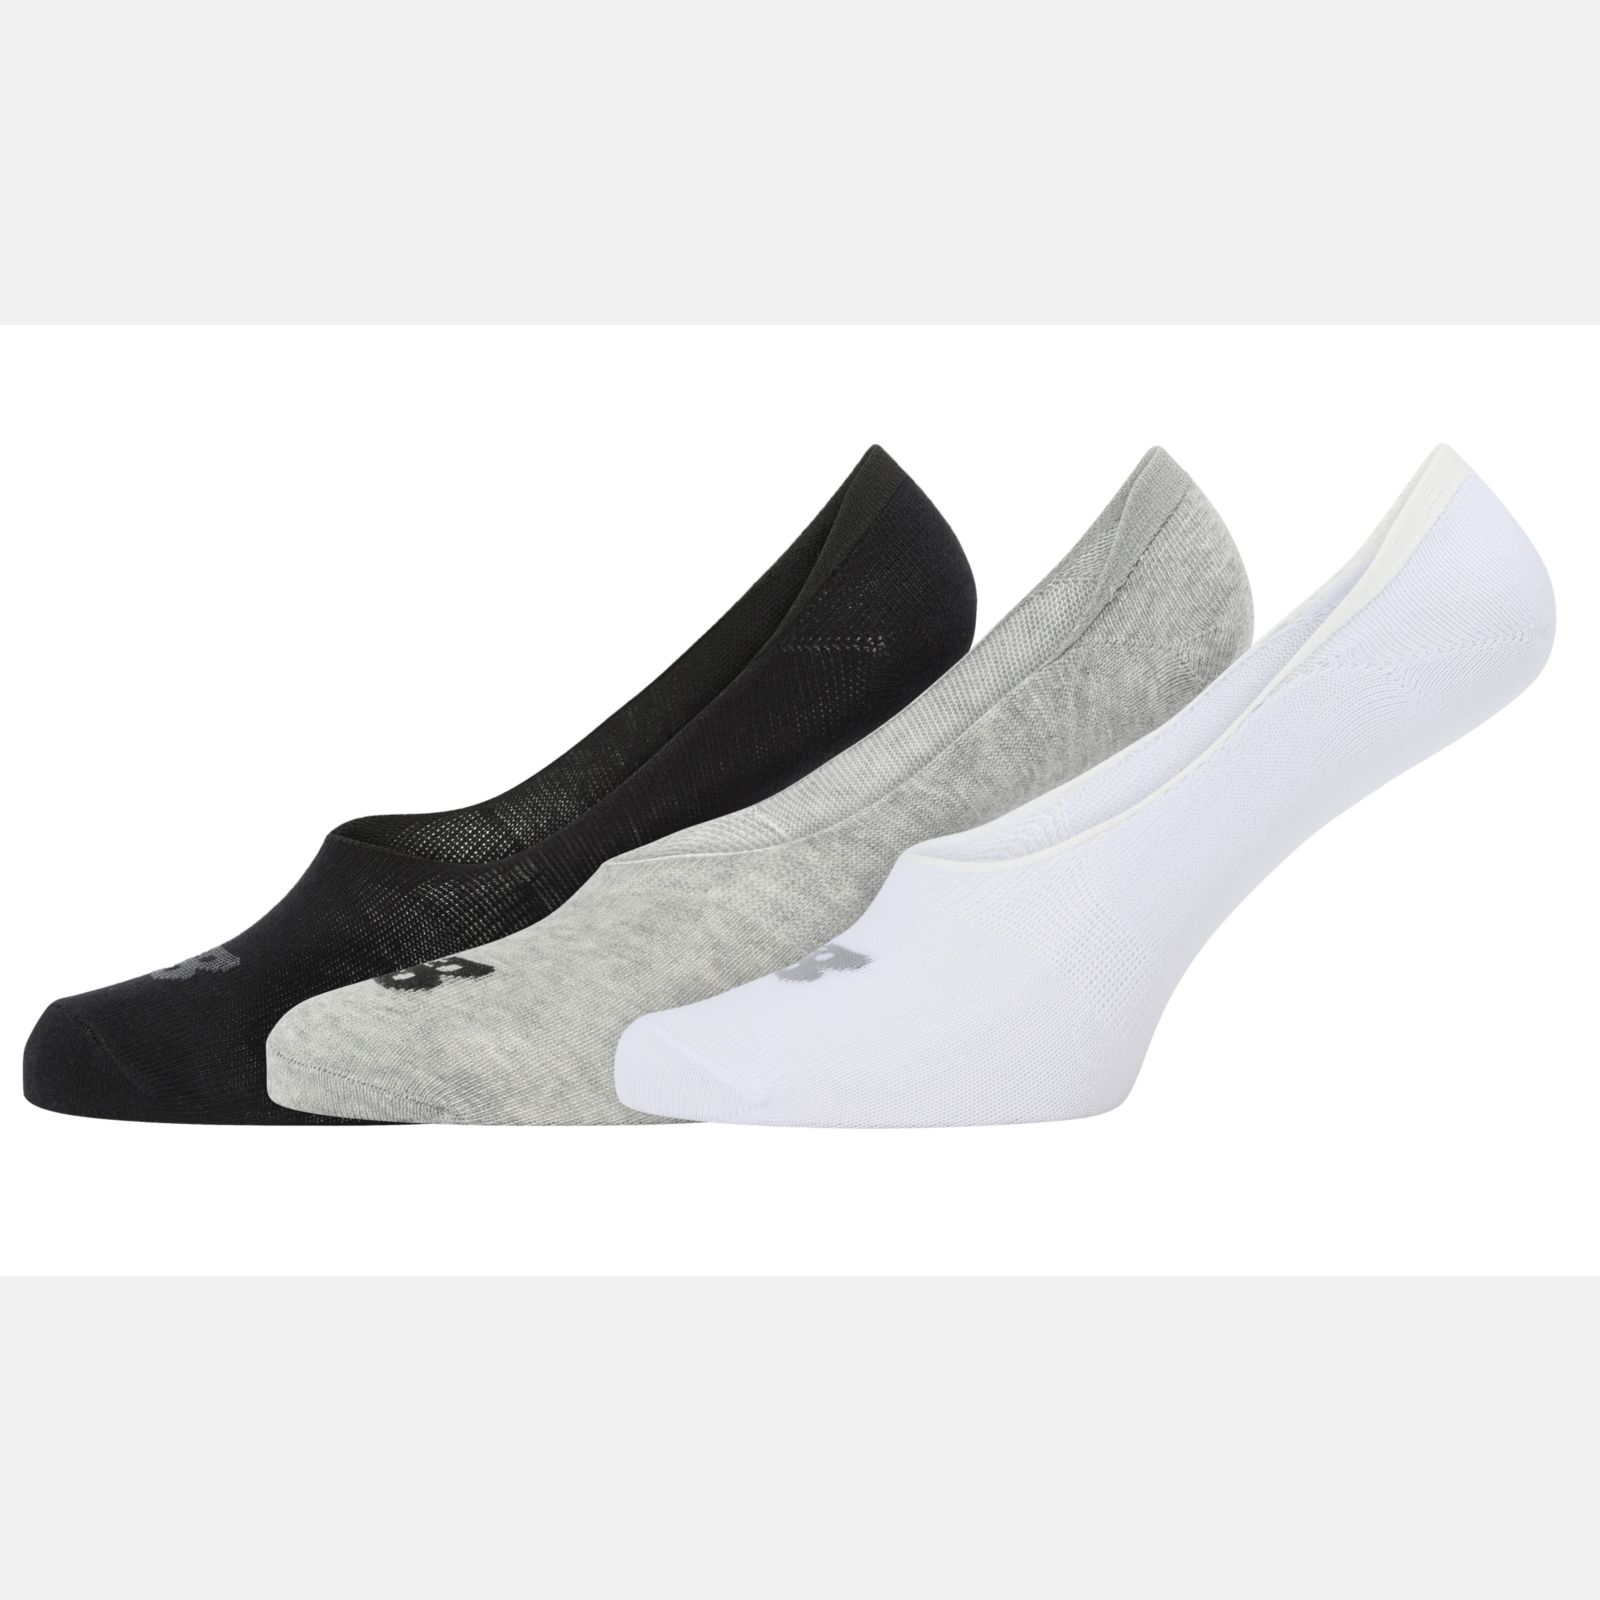 Unisex Performance Cotton Unseen Liner Socks 3 Pack - New Balance